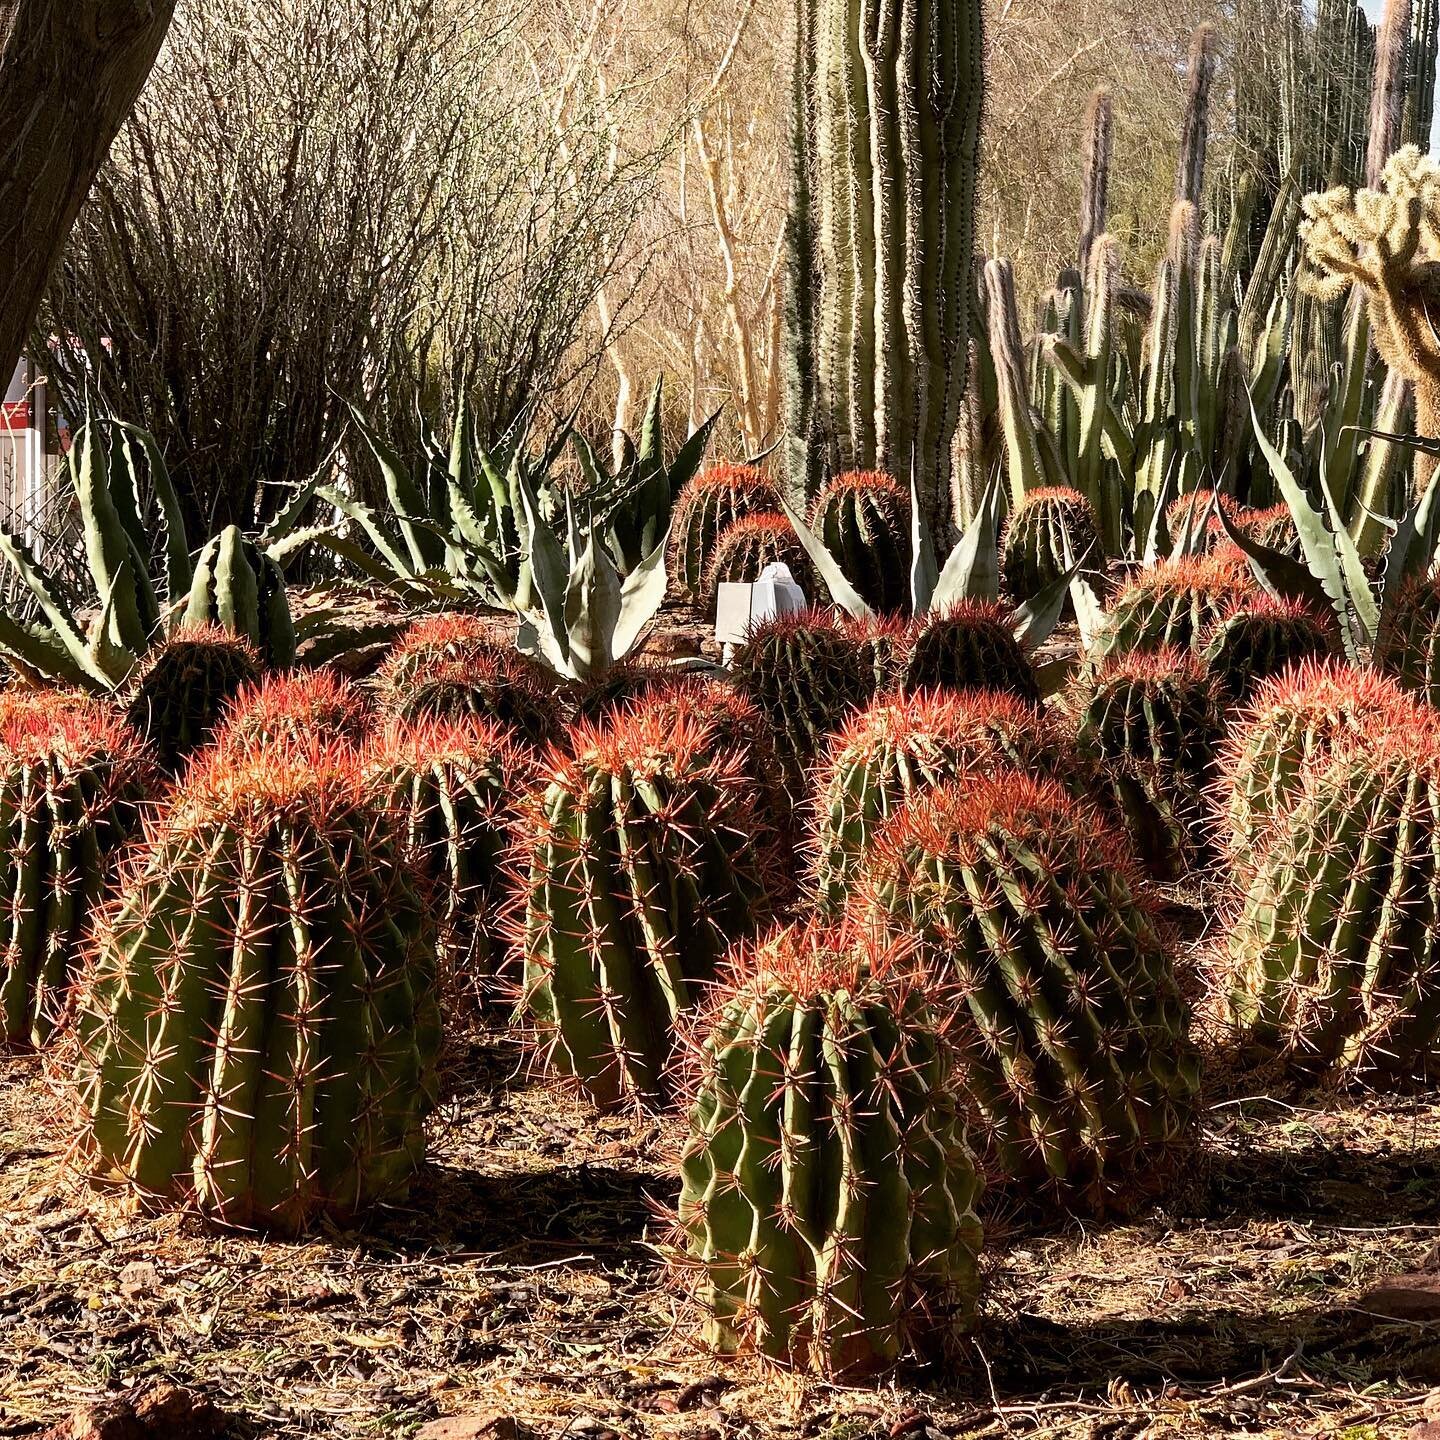 Desert Botanical Garden

#desertlife 
#cacti 
#ilovecacti 
#fabulousforms